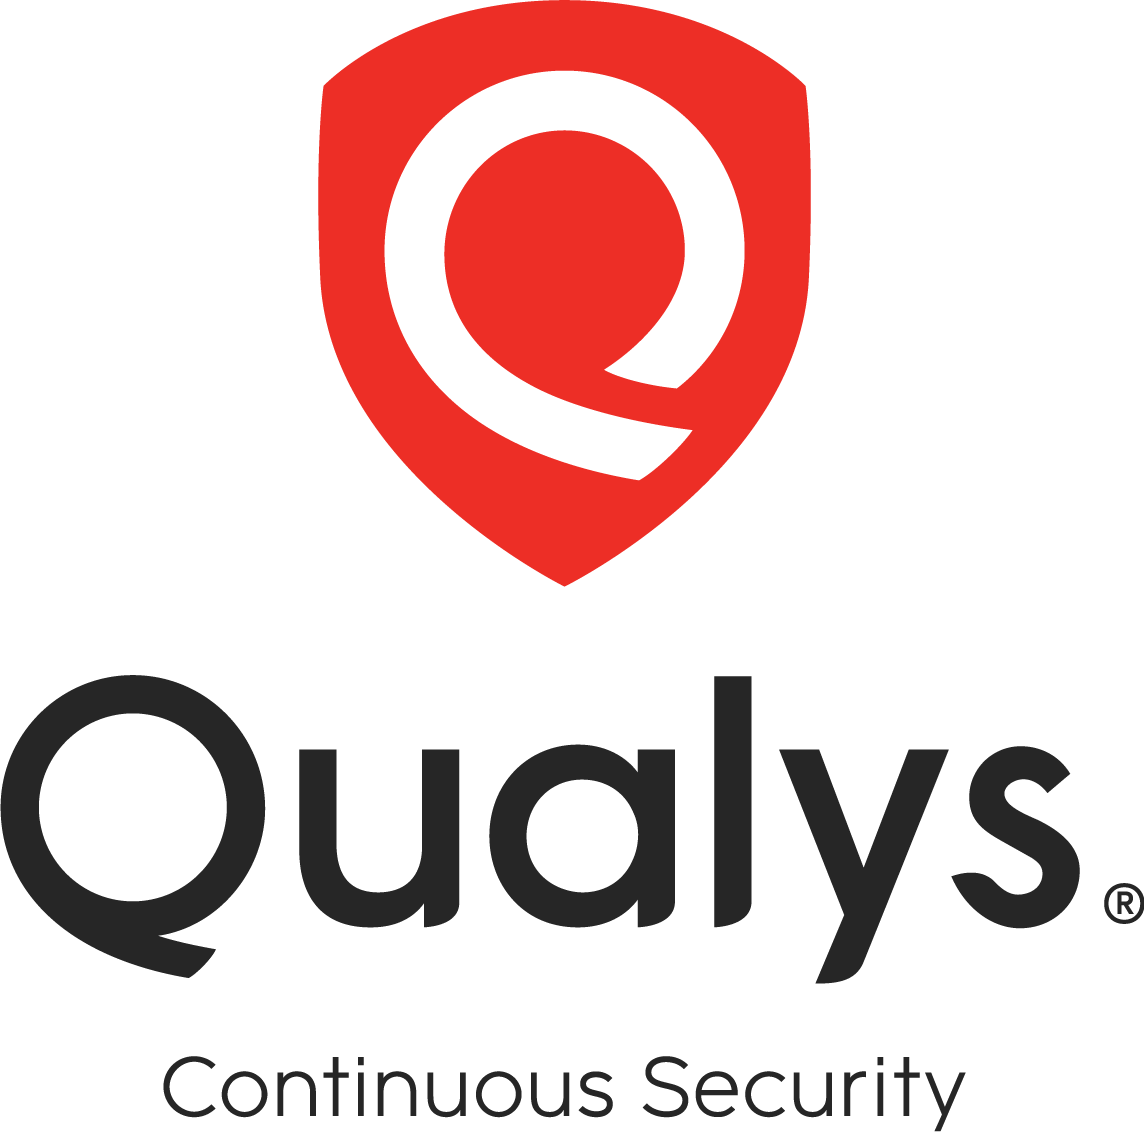 Qualys Cloud Security Company.